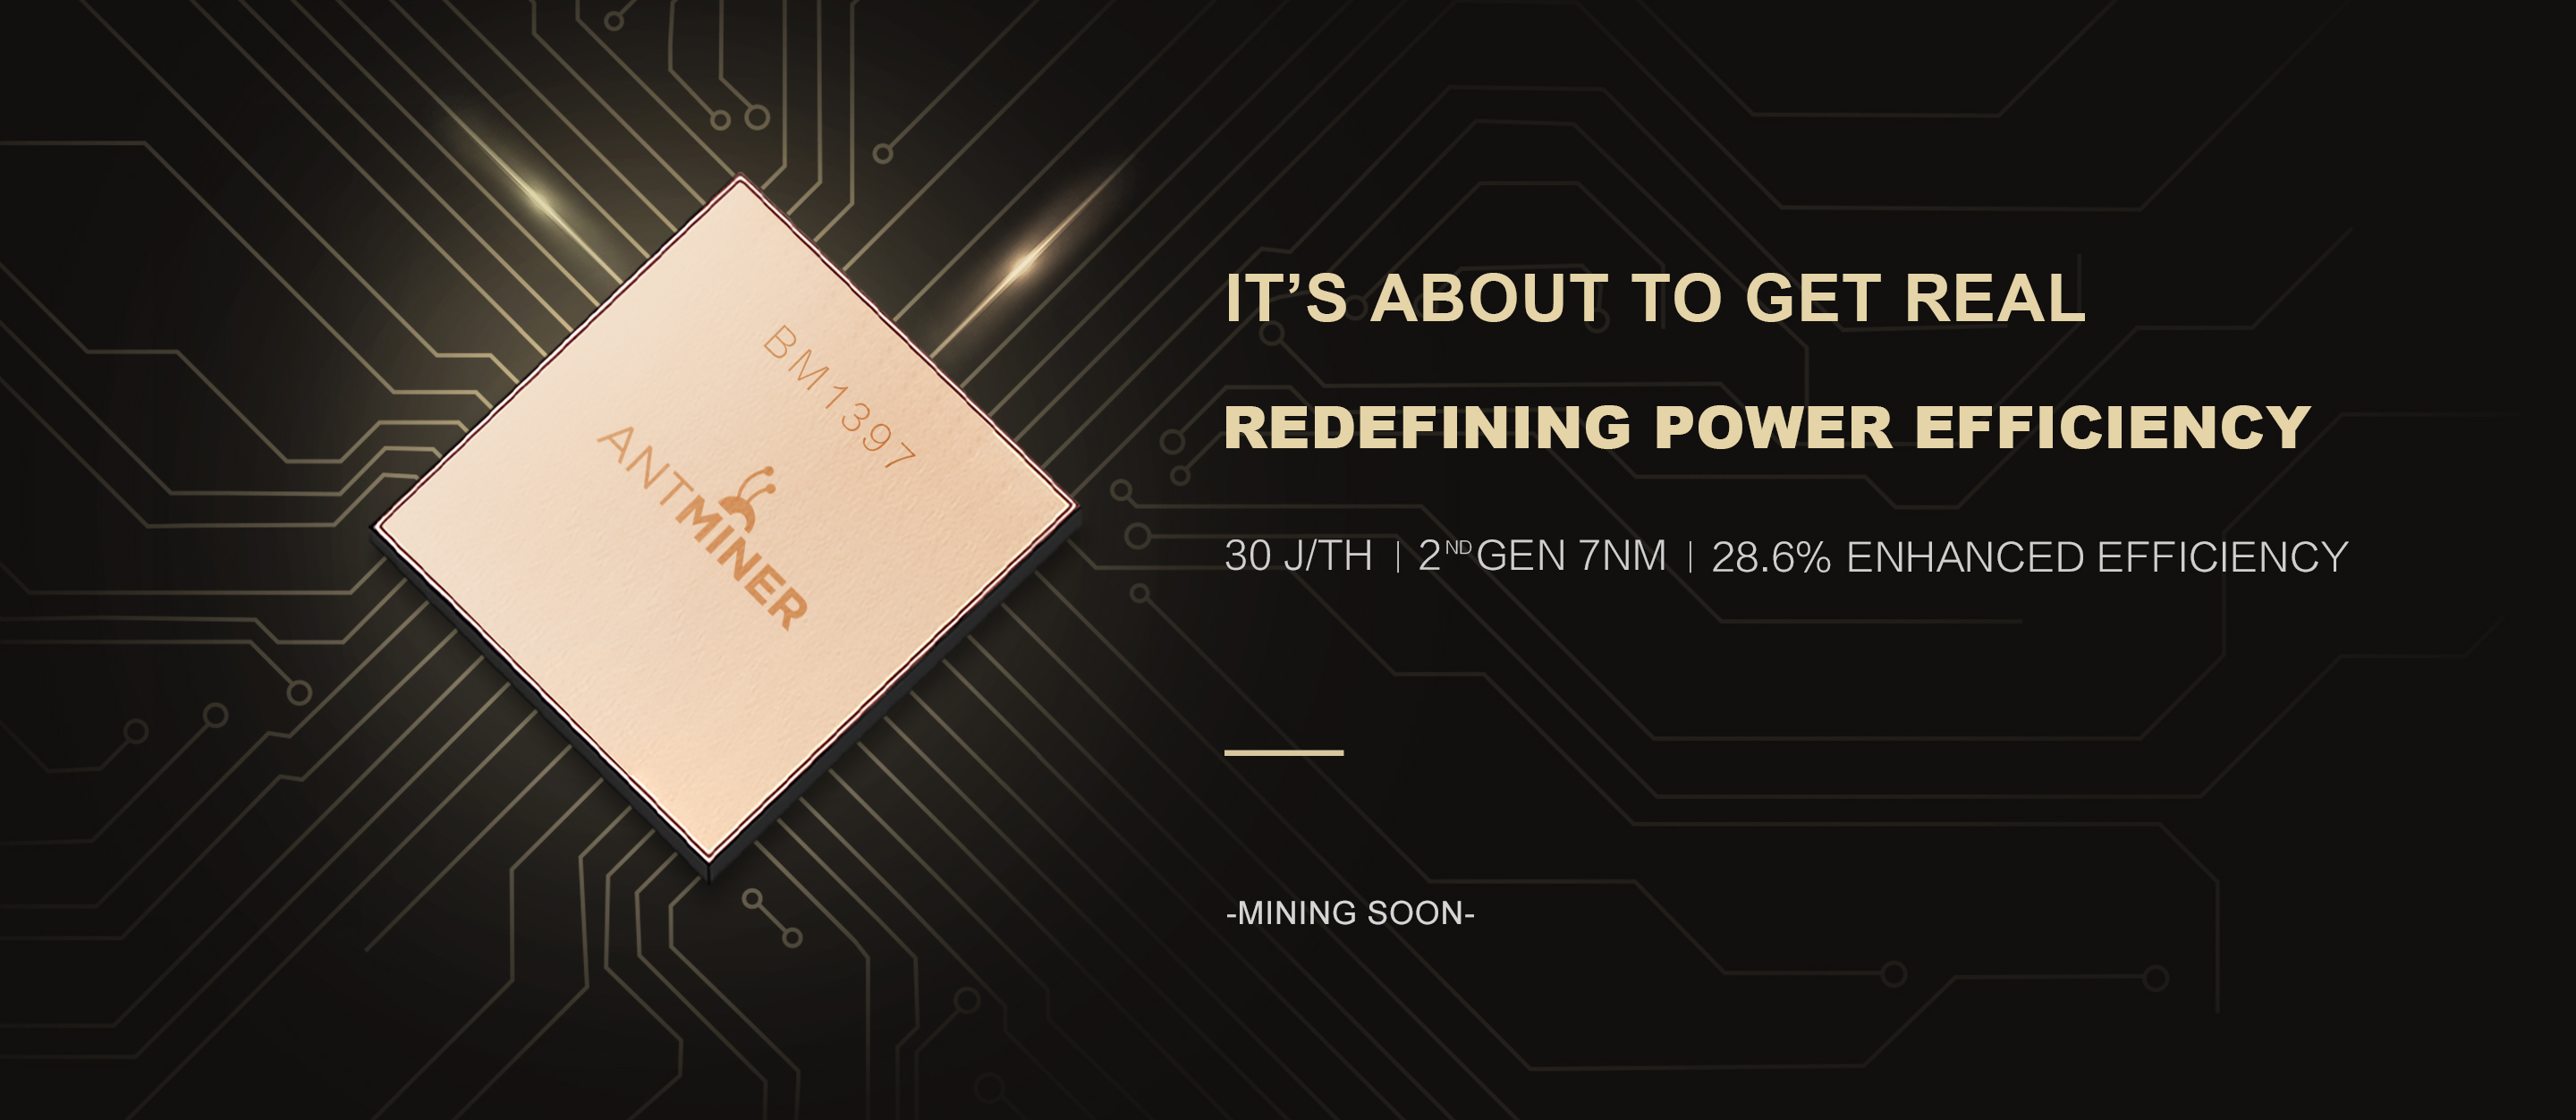 Bitmain Announces Next Generation 7nm Asic Chip For Sha256 Mining - 